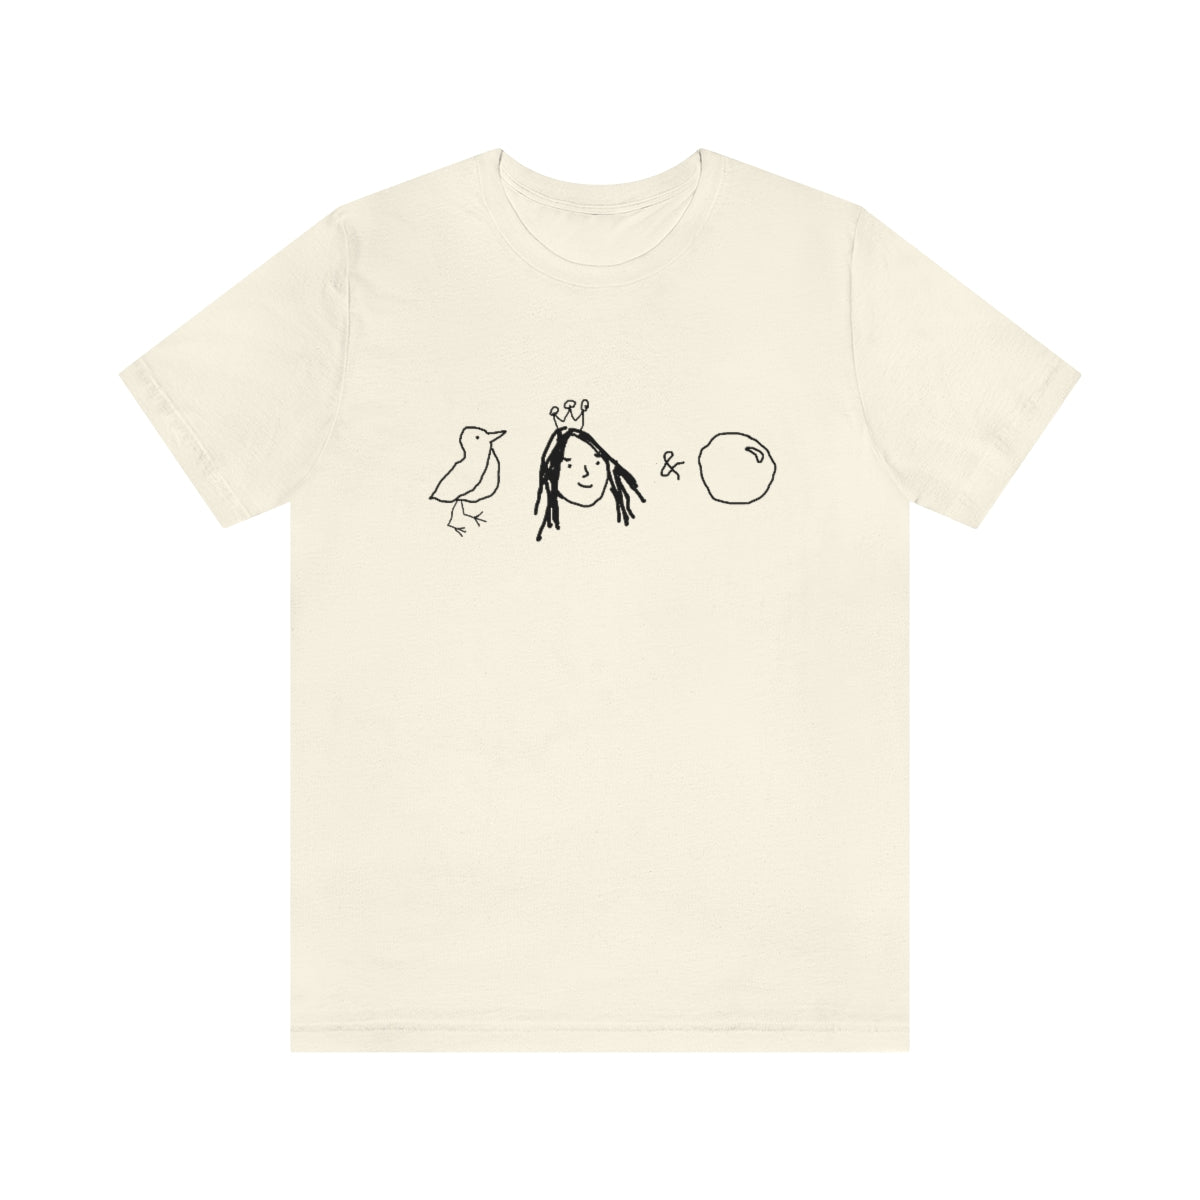 birdgirl & bubble shirt (Unisex)